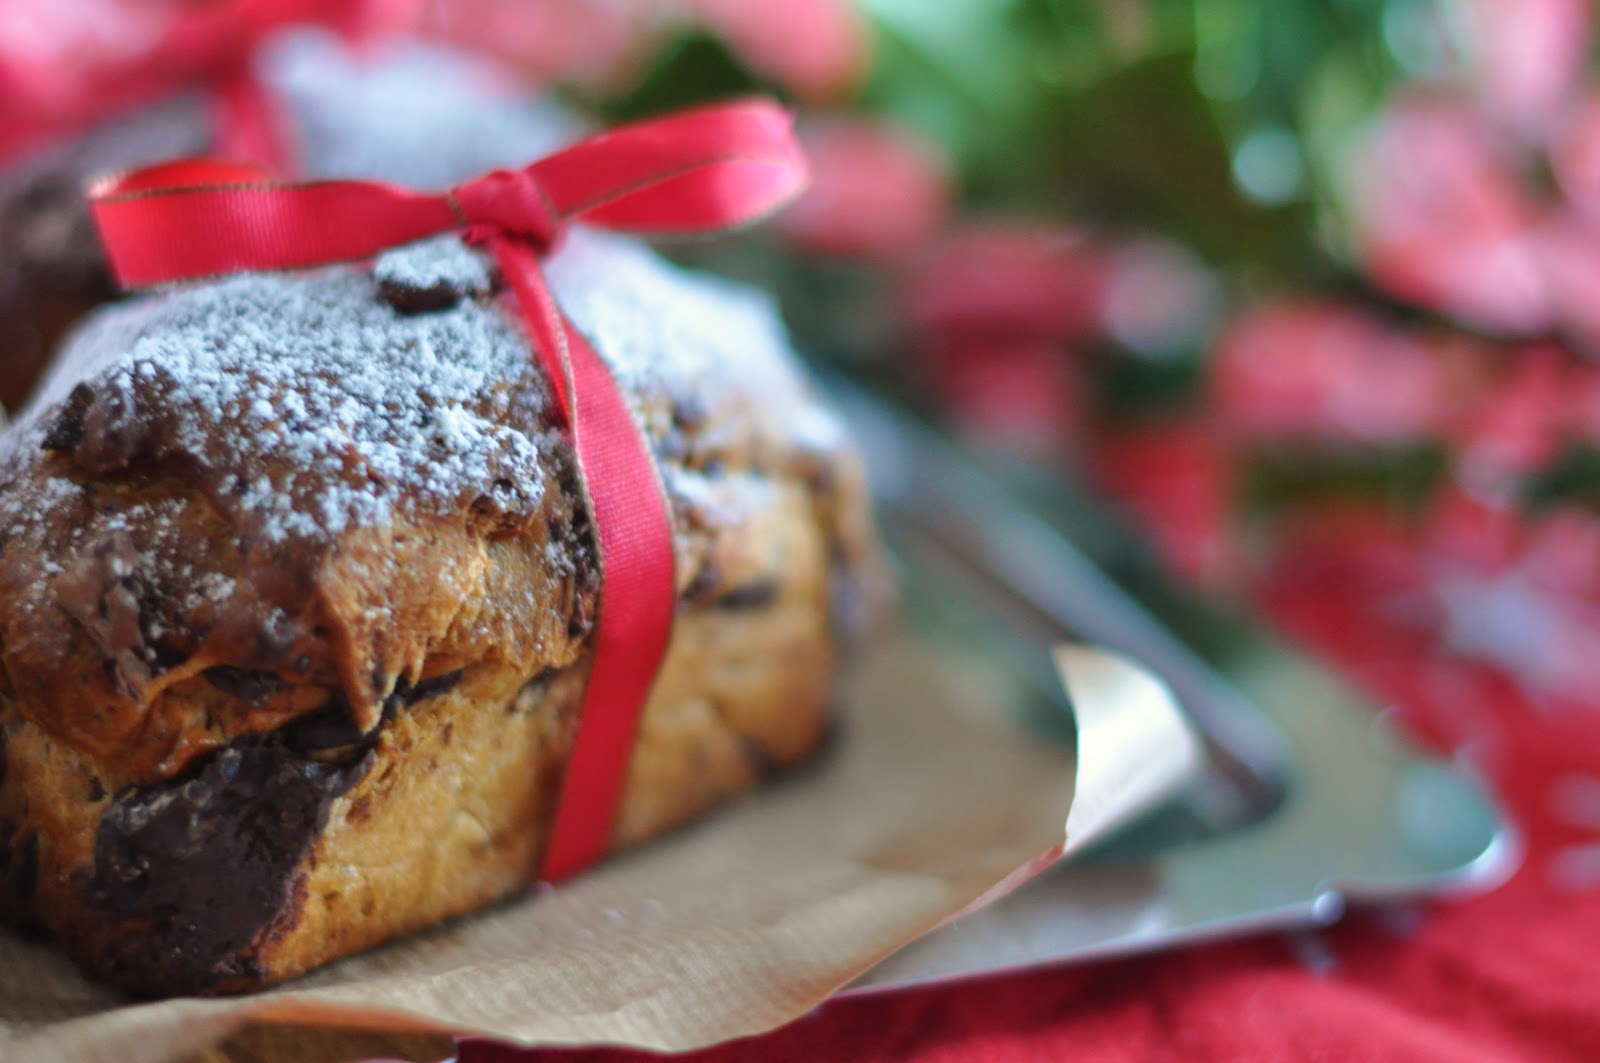 Stuff I make, bake and love: Mini Panettone : Easy Edible Christmas Gifts